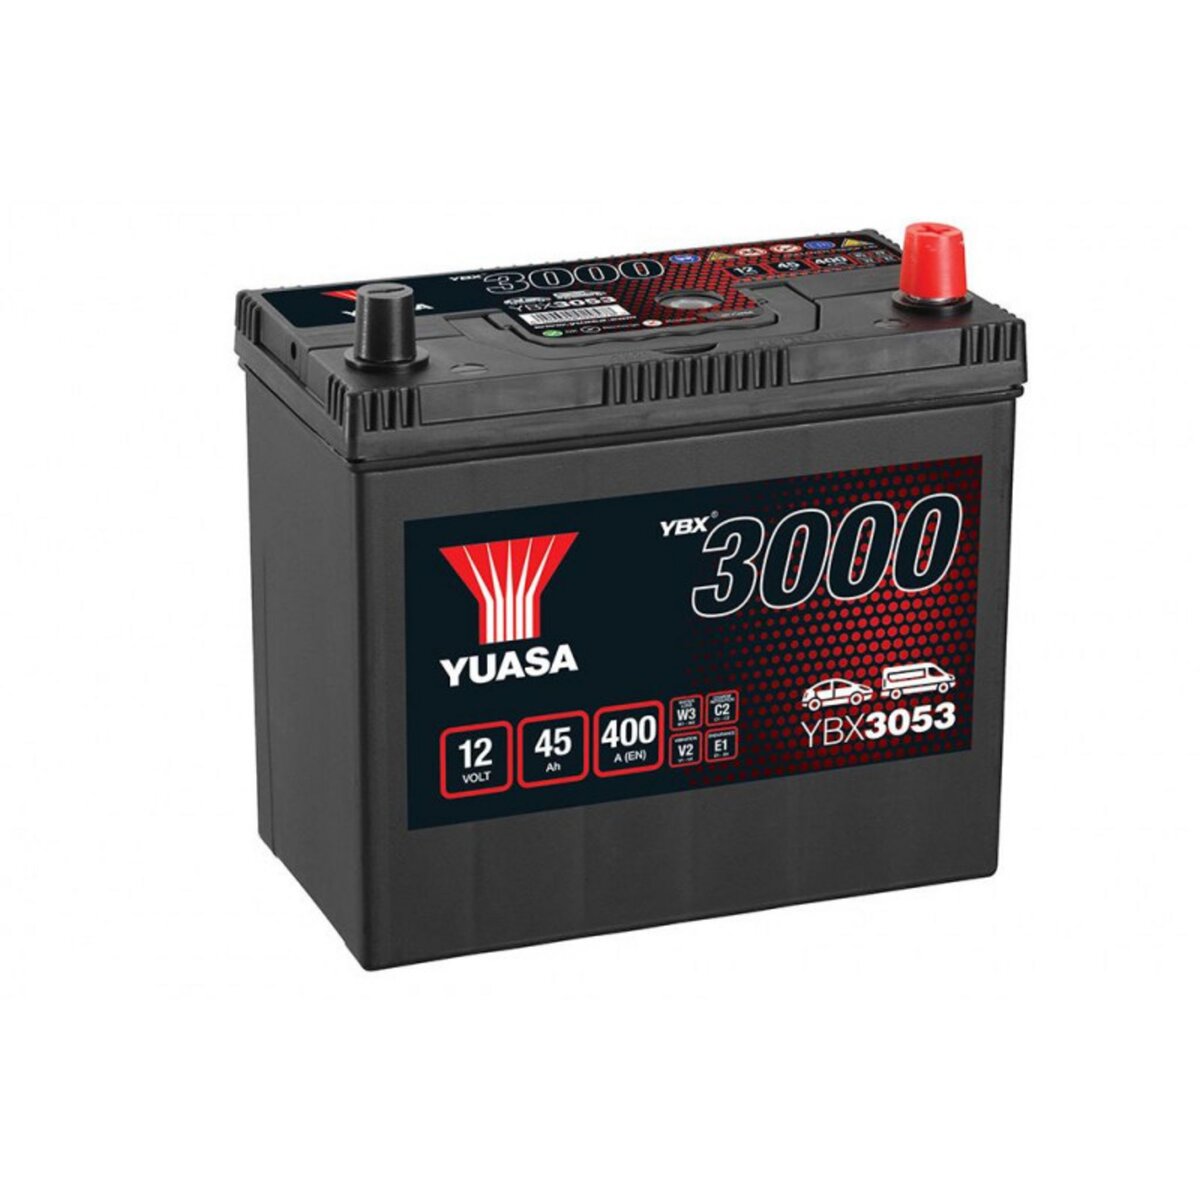 YUASA Batterie Yuasa SMF YBX3053 12V 45ah 400A pas cher 